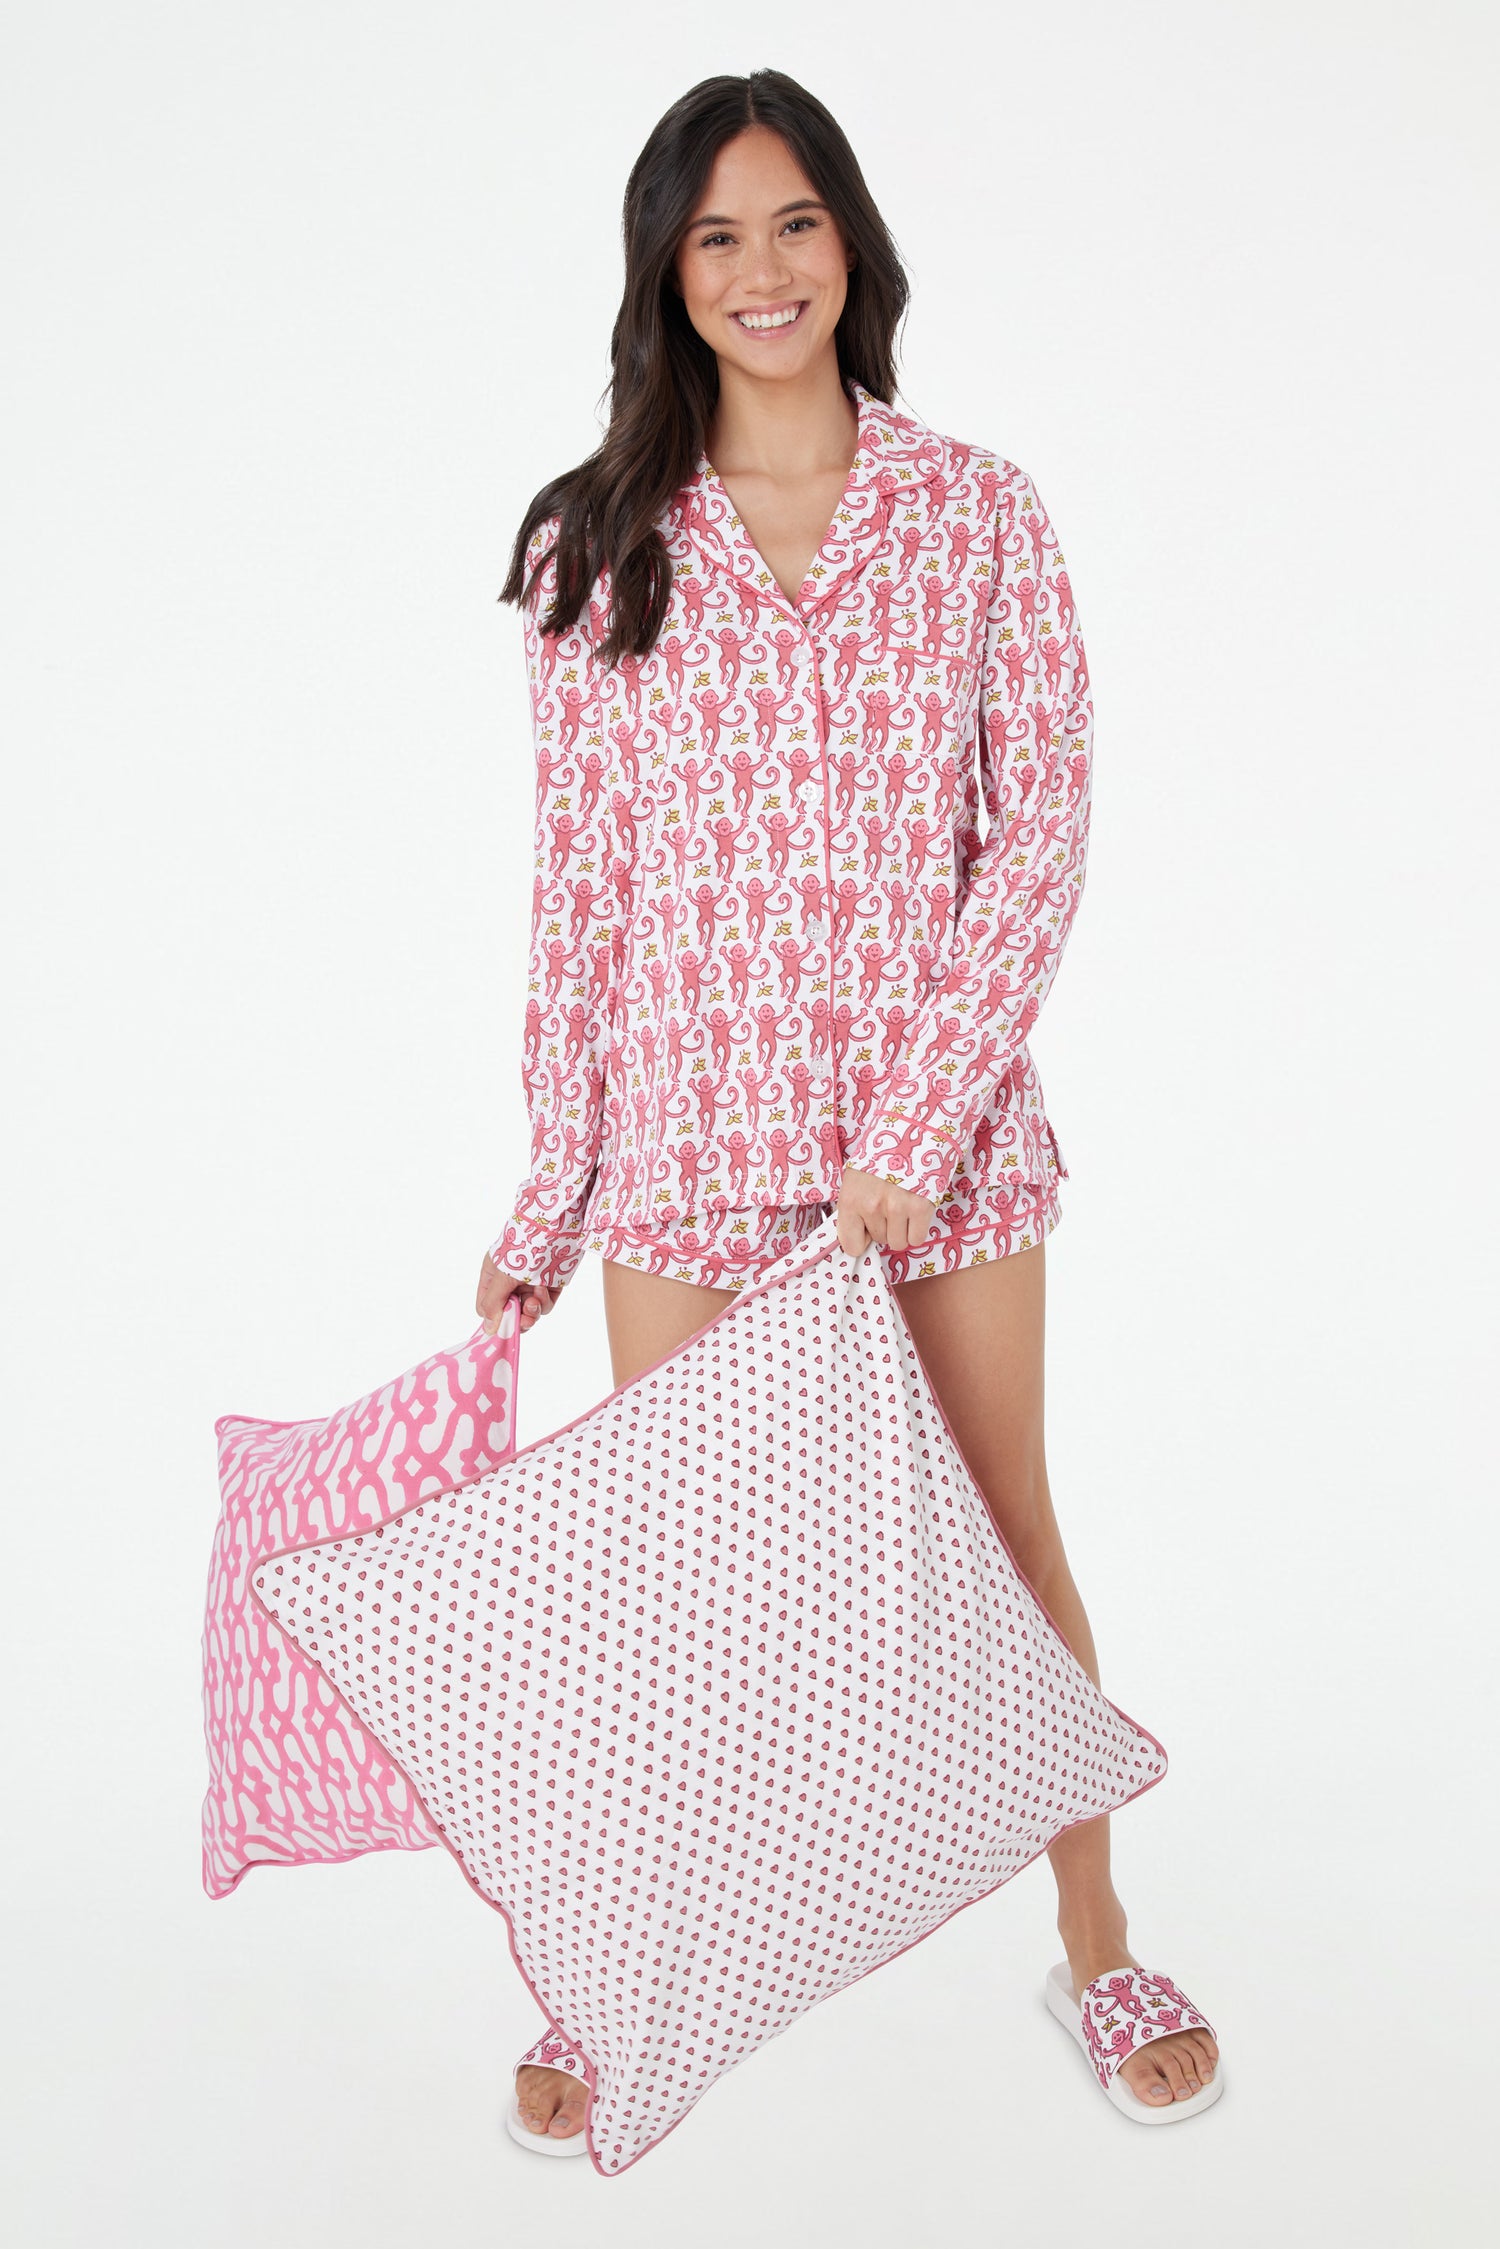 Roller Rabbit Pink Monkey Paola Polo Pajamas